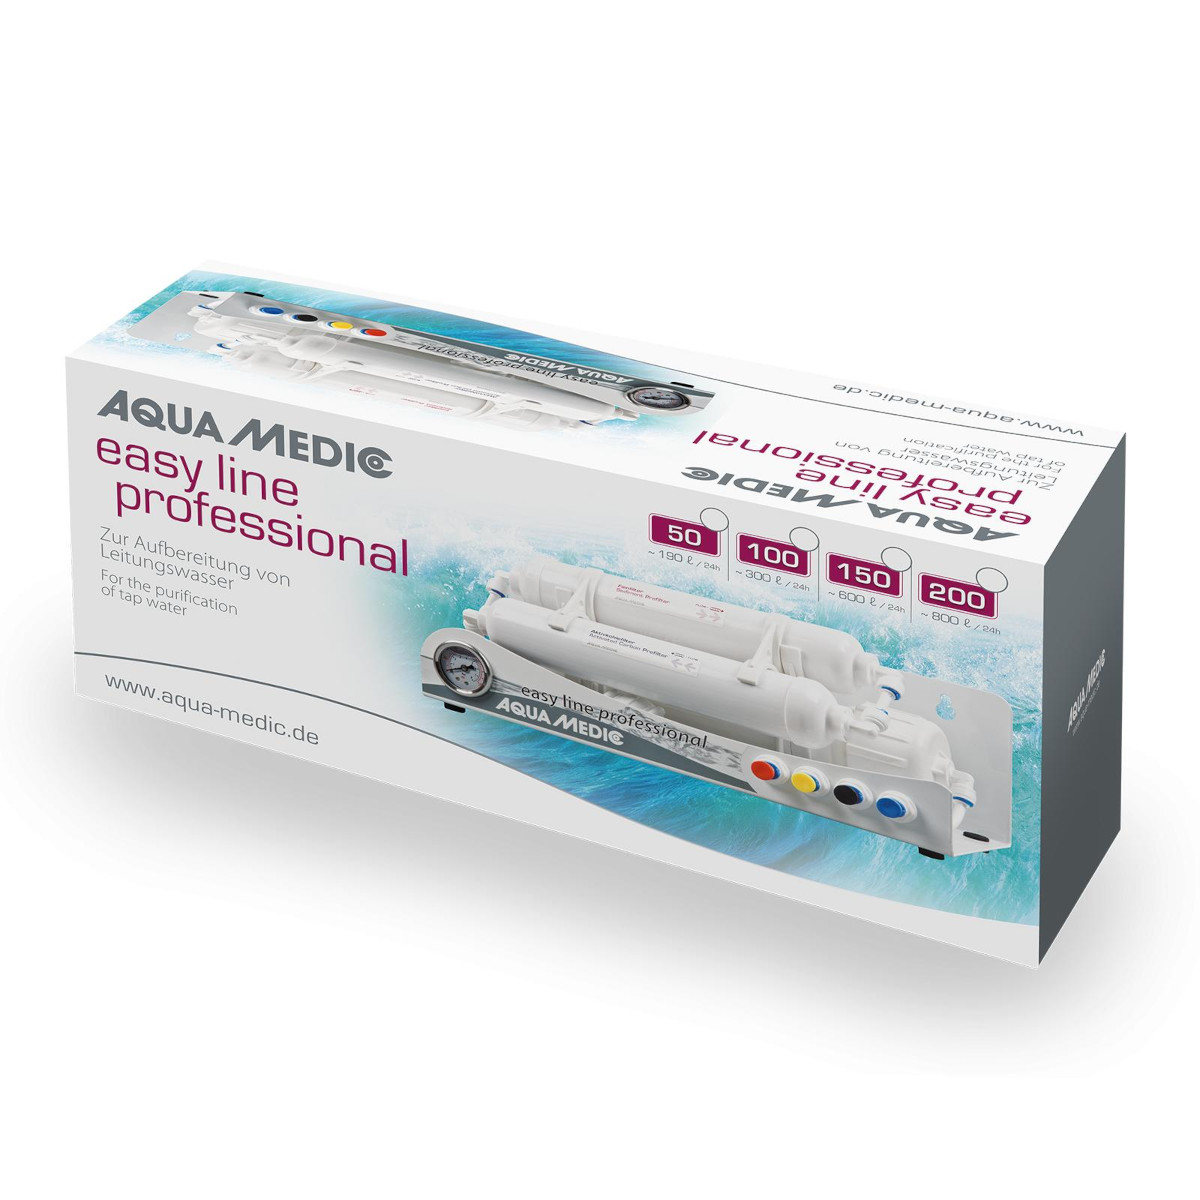 Aqua Medic easy line professional 150 GPD Verpackung